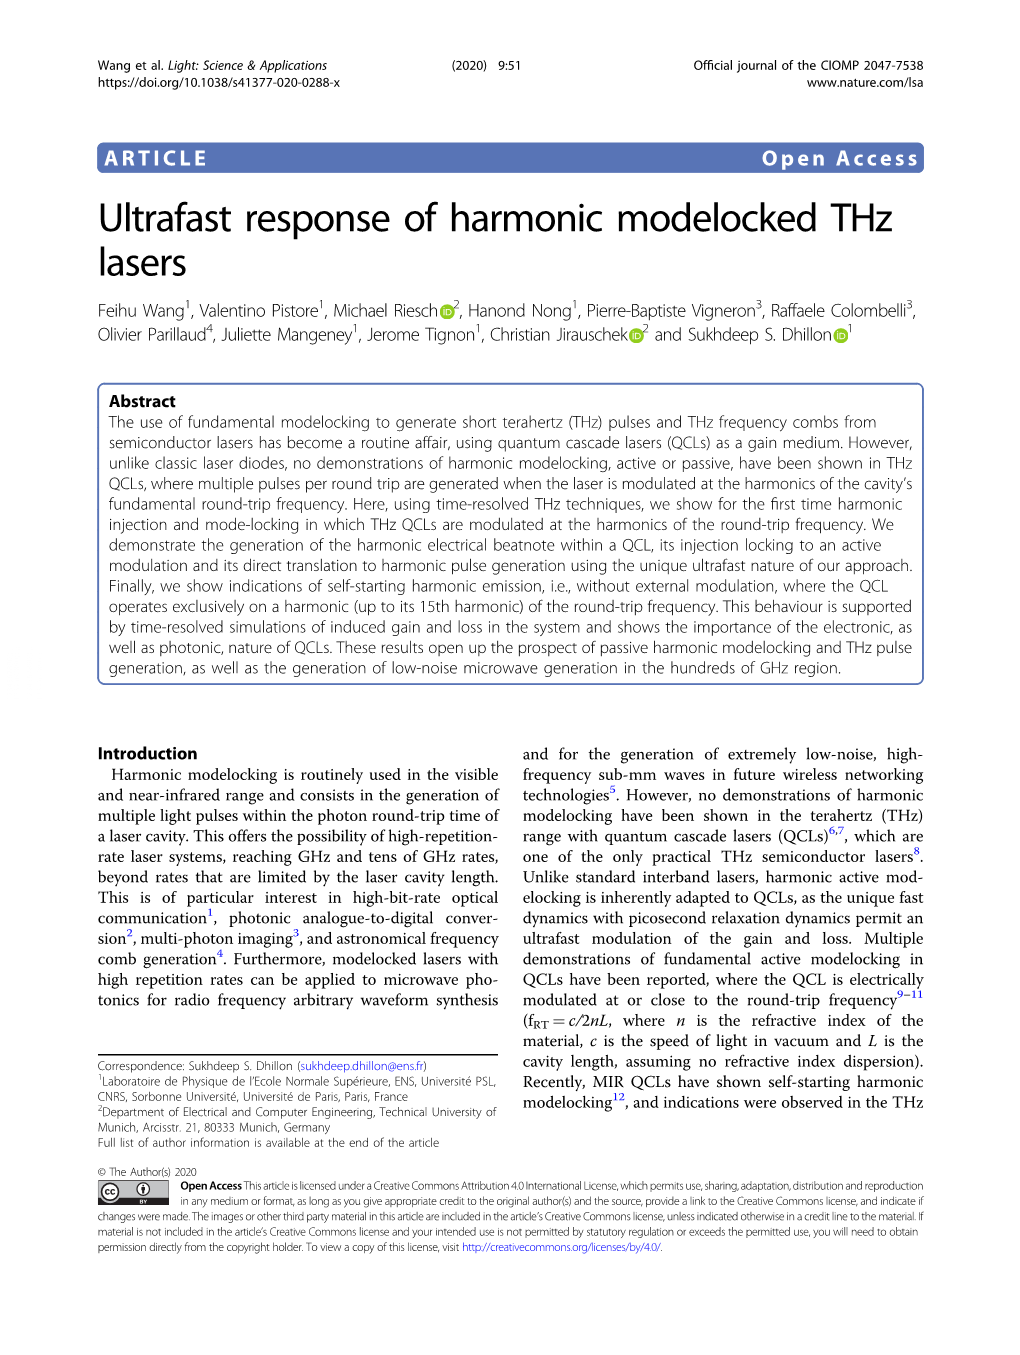 Ultrafast Response of Harmonic Modelocked Thz Lasers